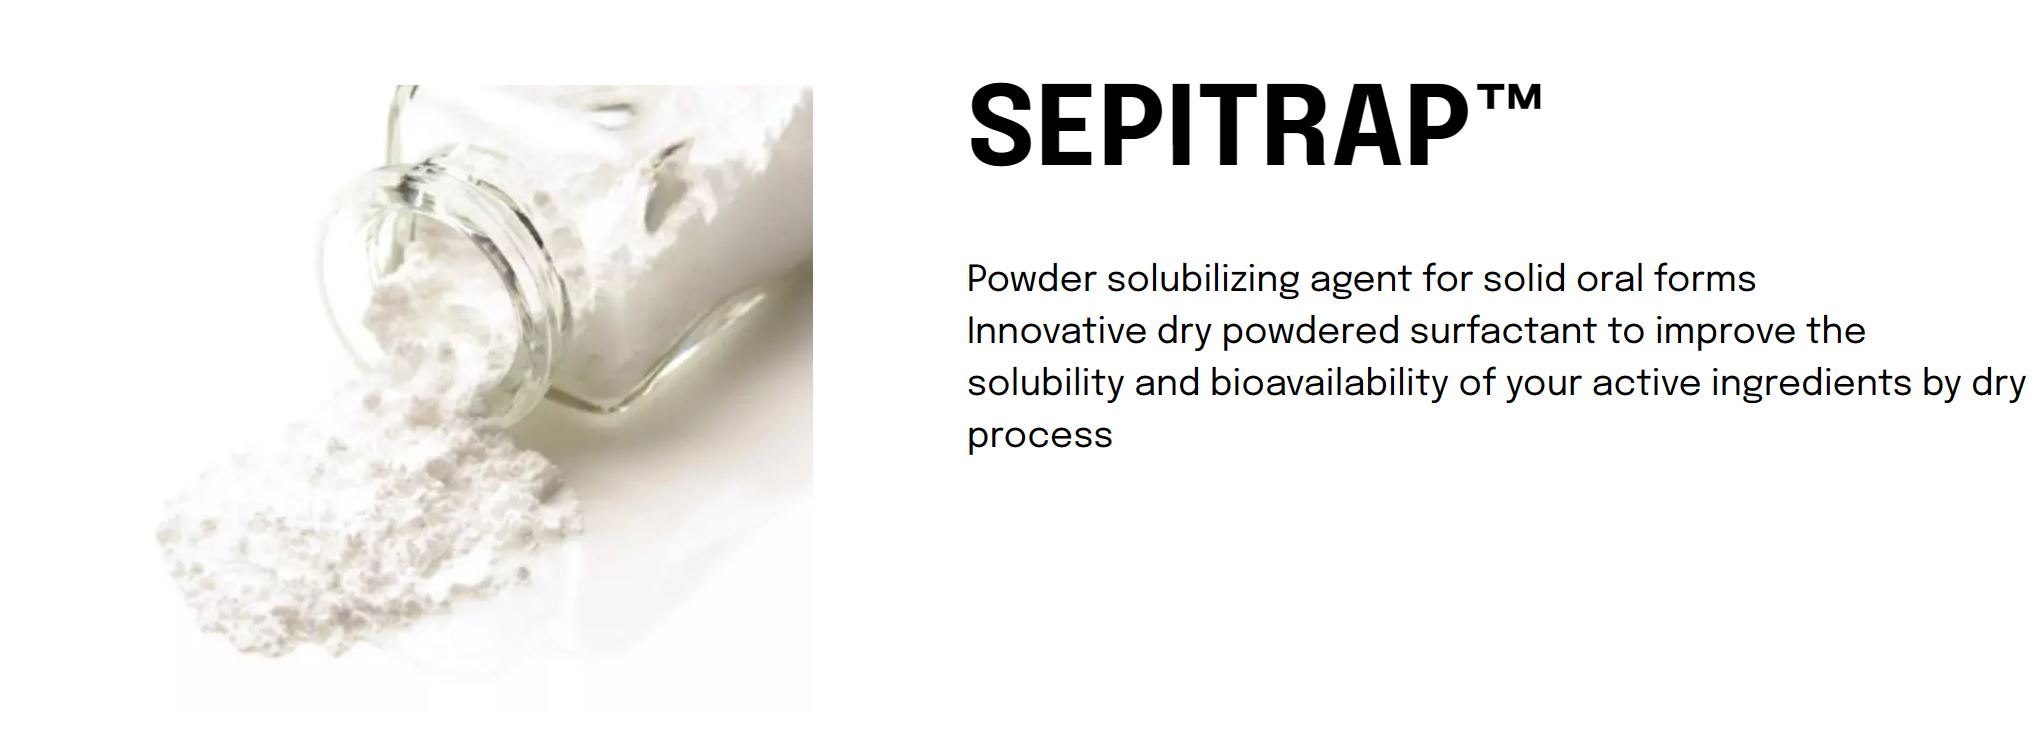 SEPITRAP™ Powder solubilizing agent